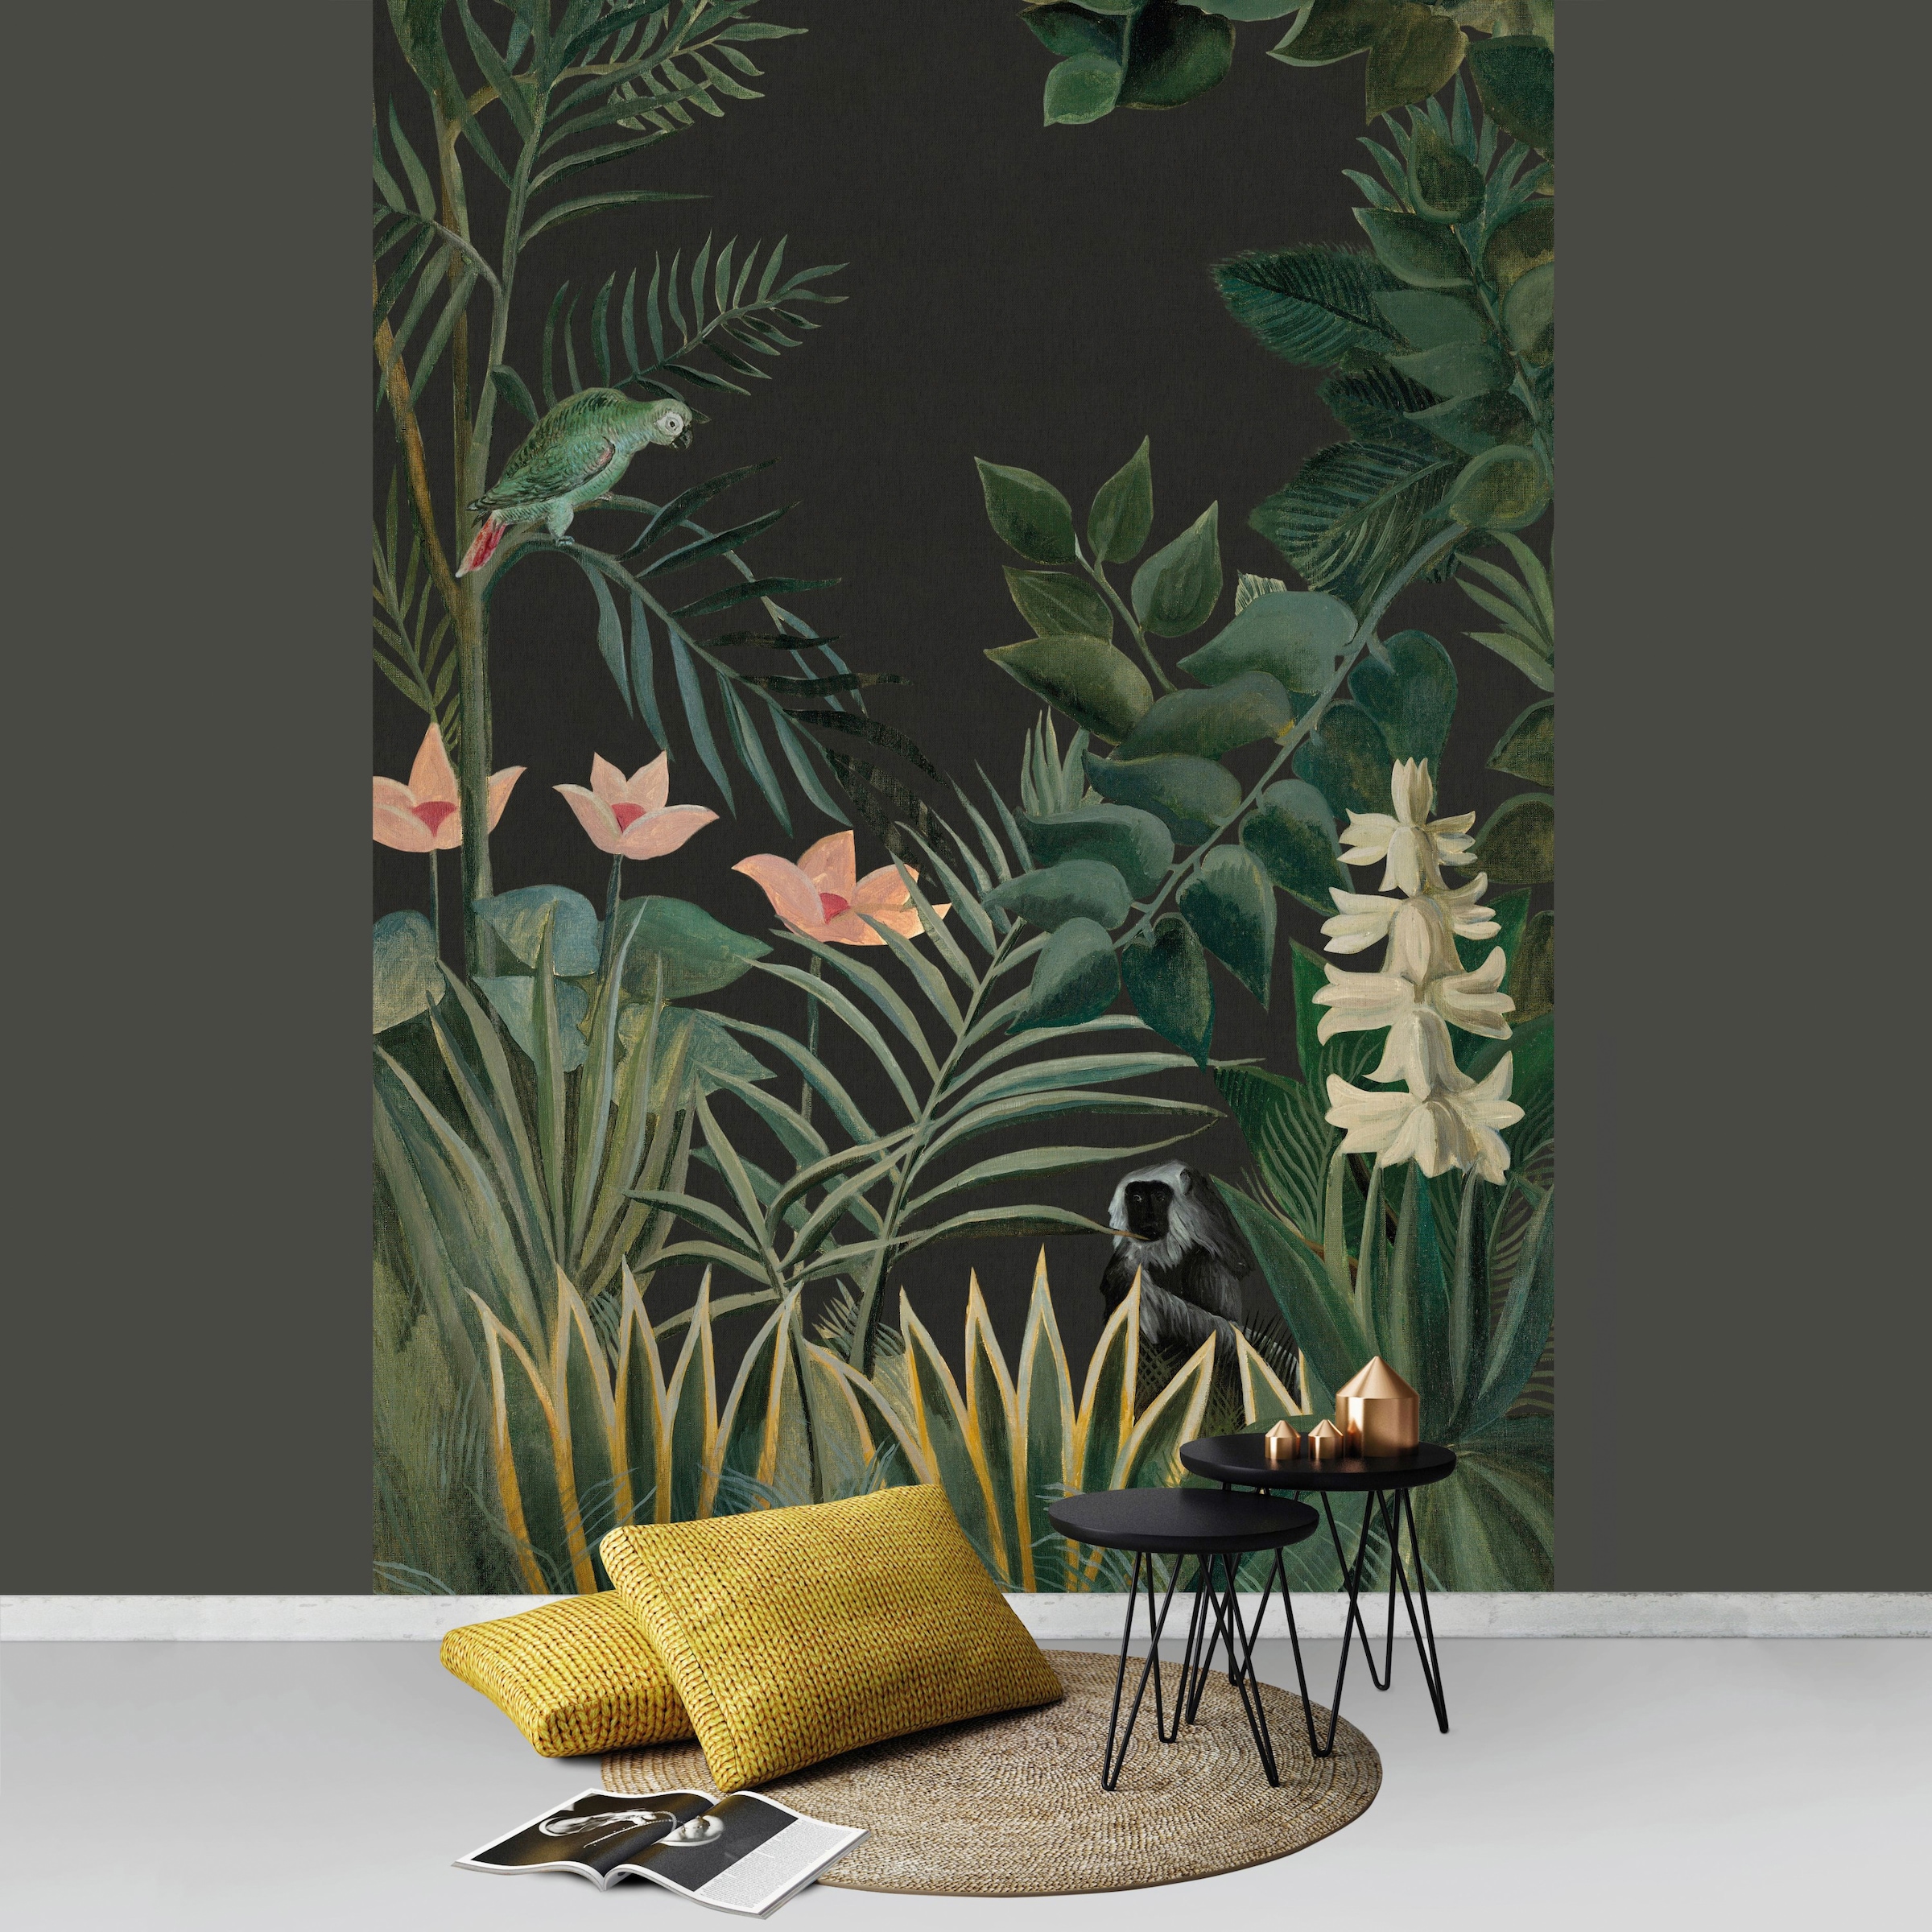 Art for the home Fototapete »Into the bush«, 200 cm Länge